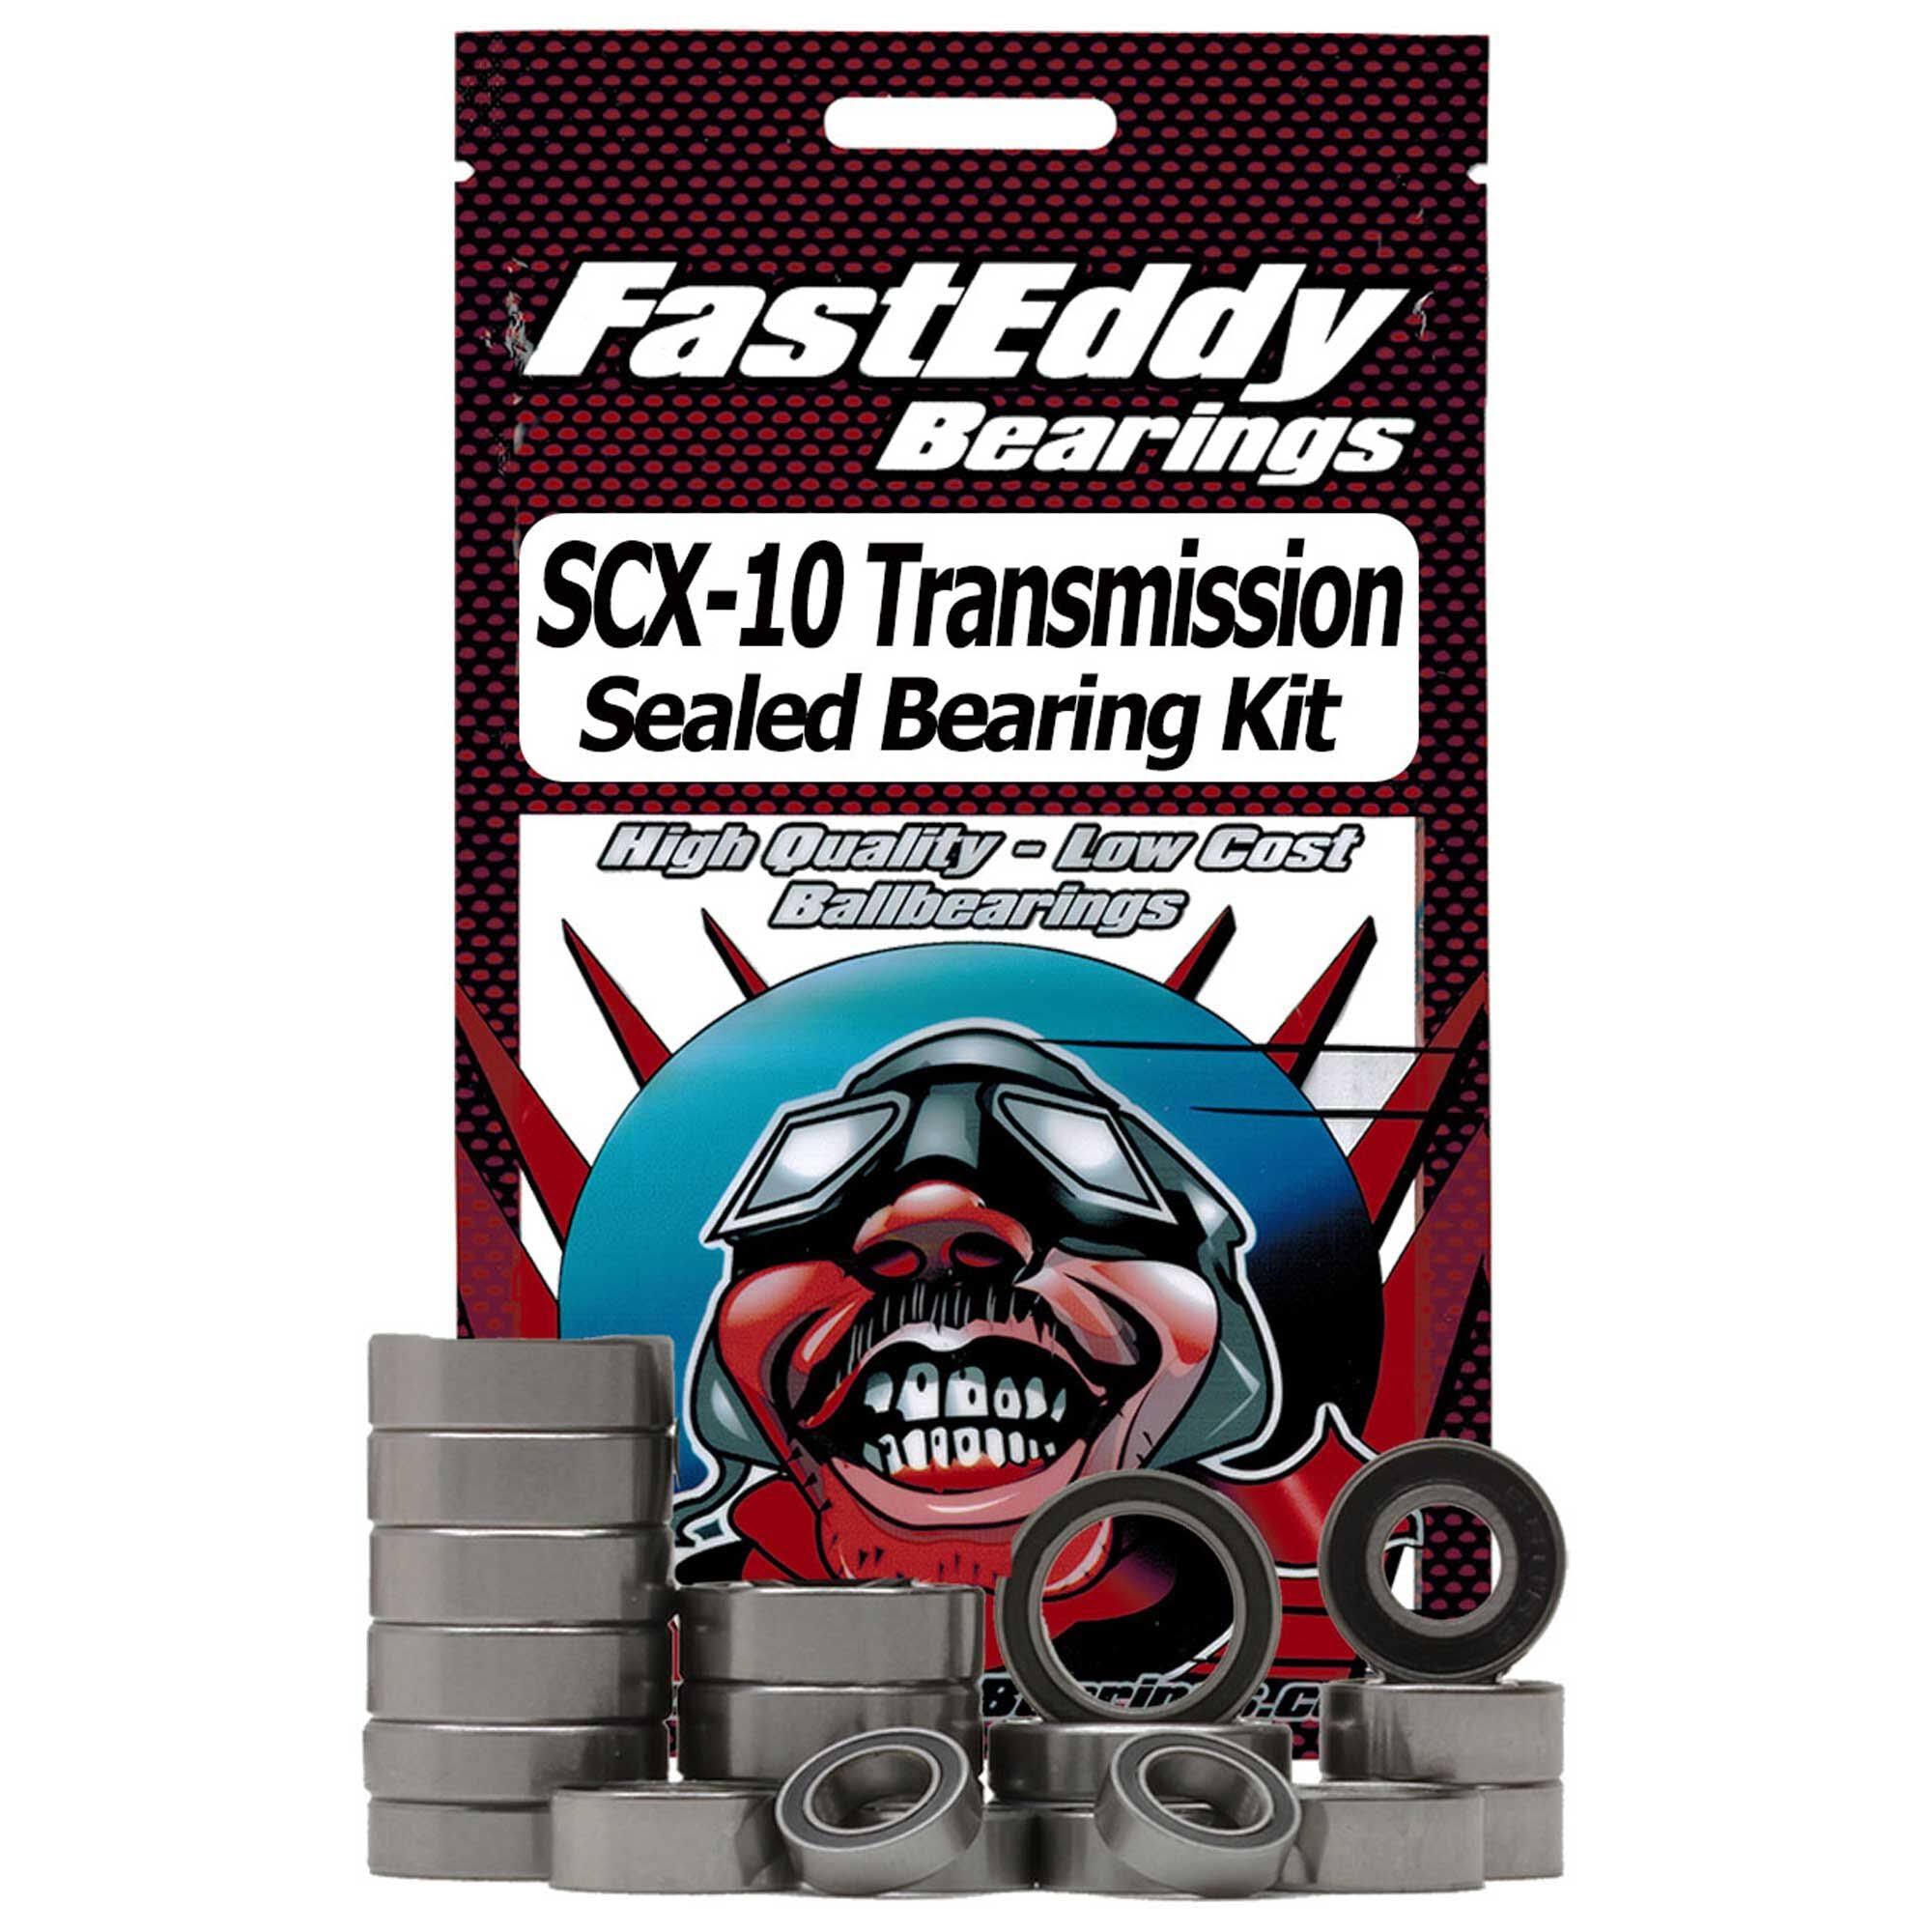 FastEddy Bearings Sealed Bearing Kit: Axial Scx10 Transmission, TFE247